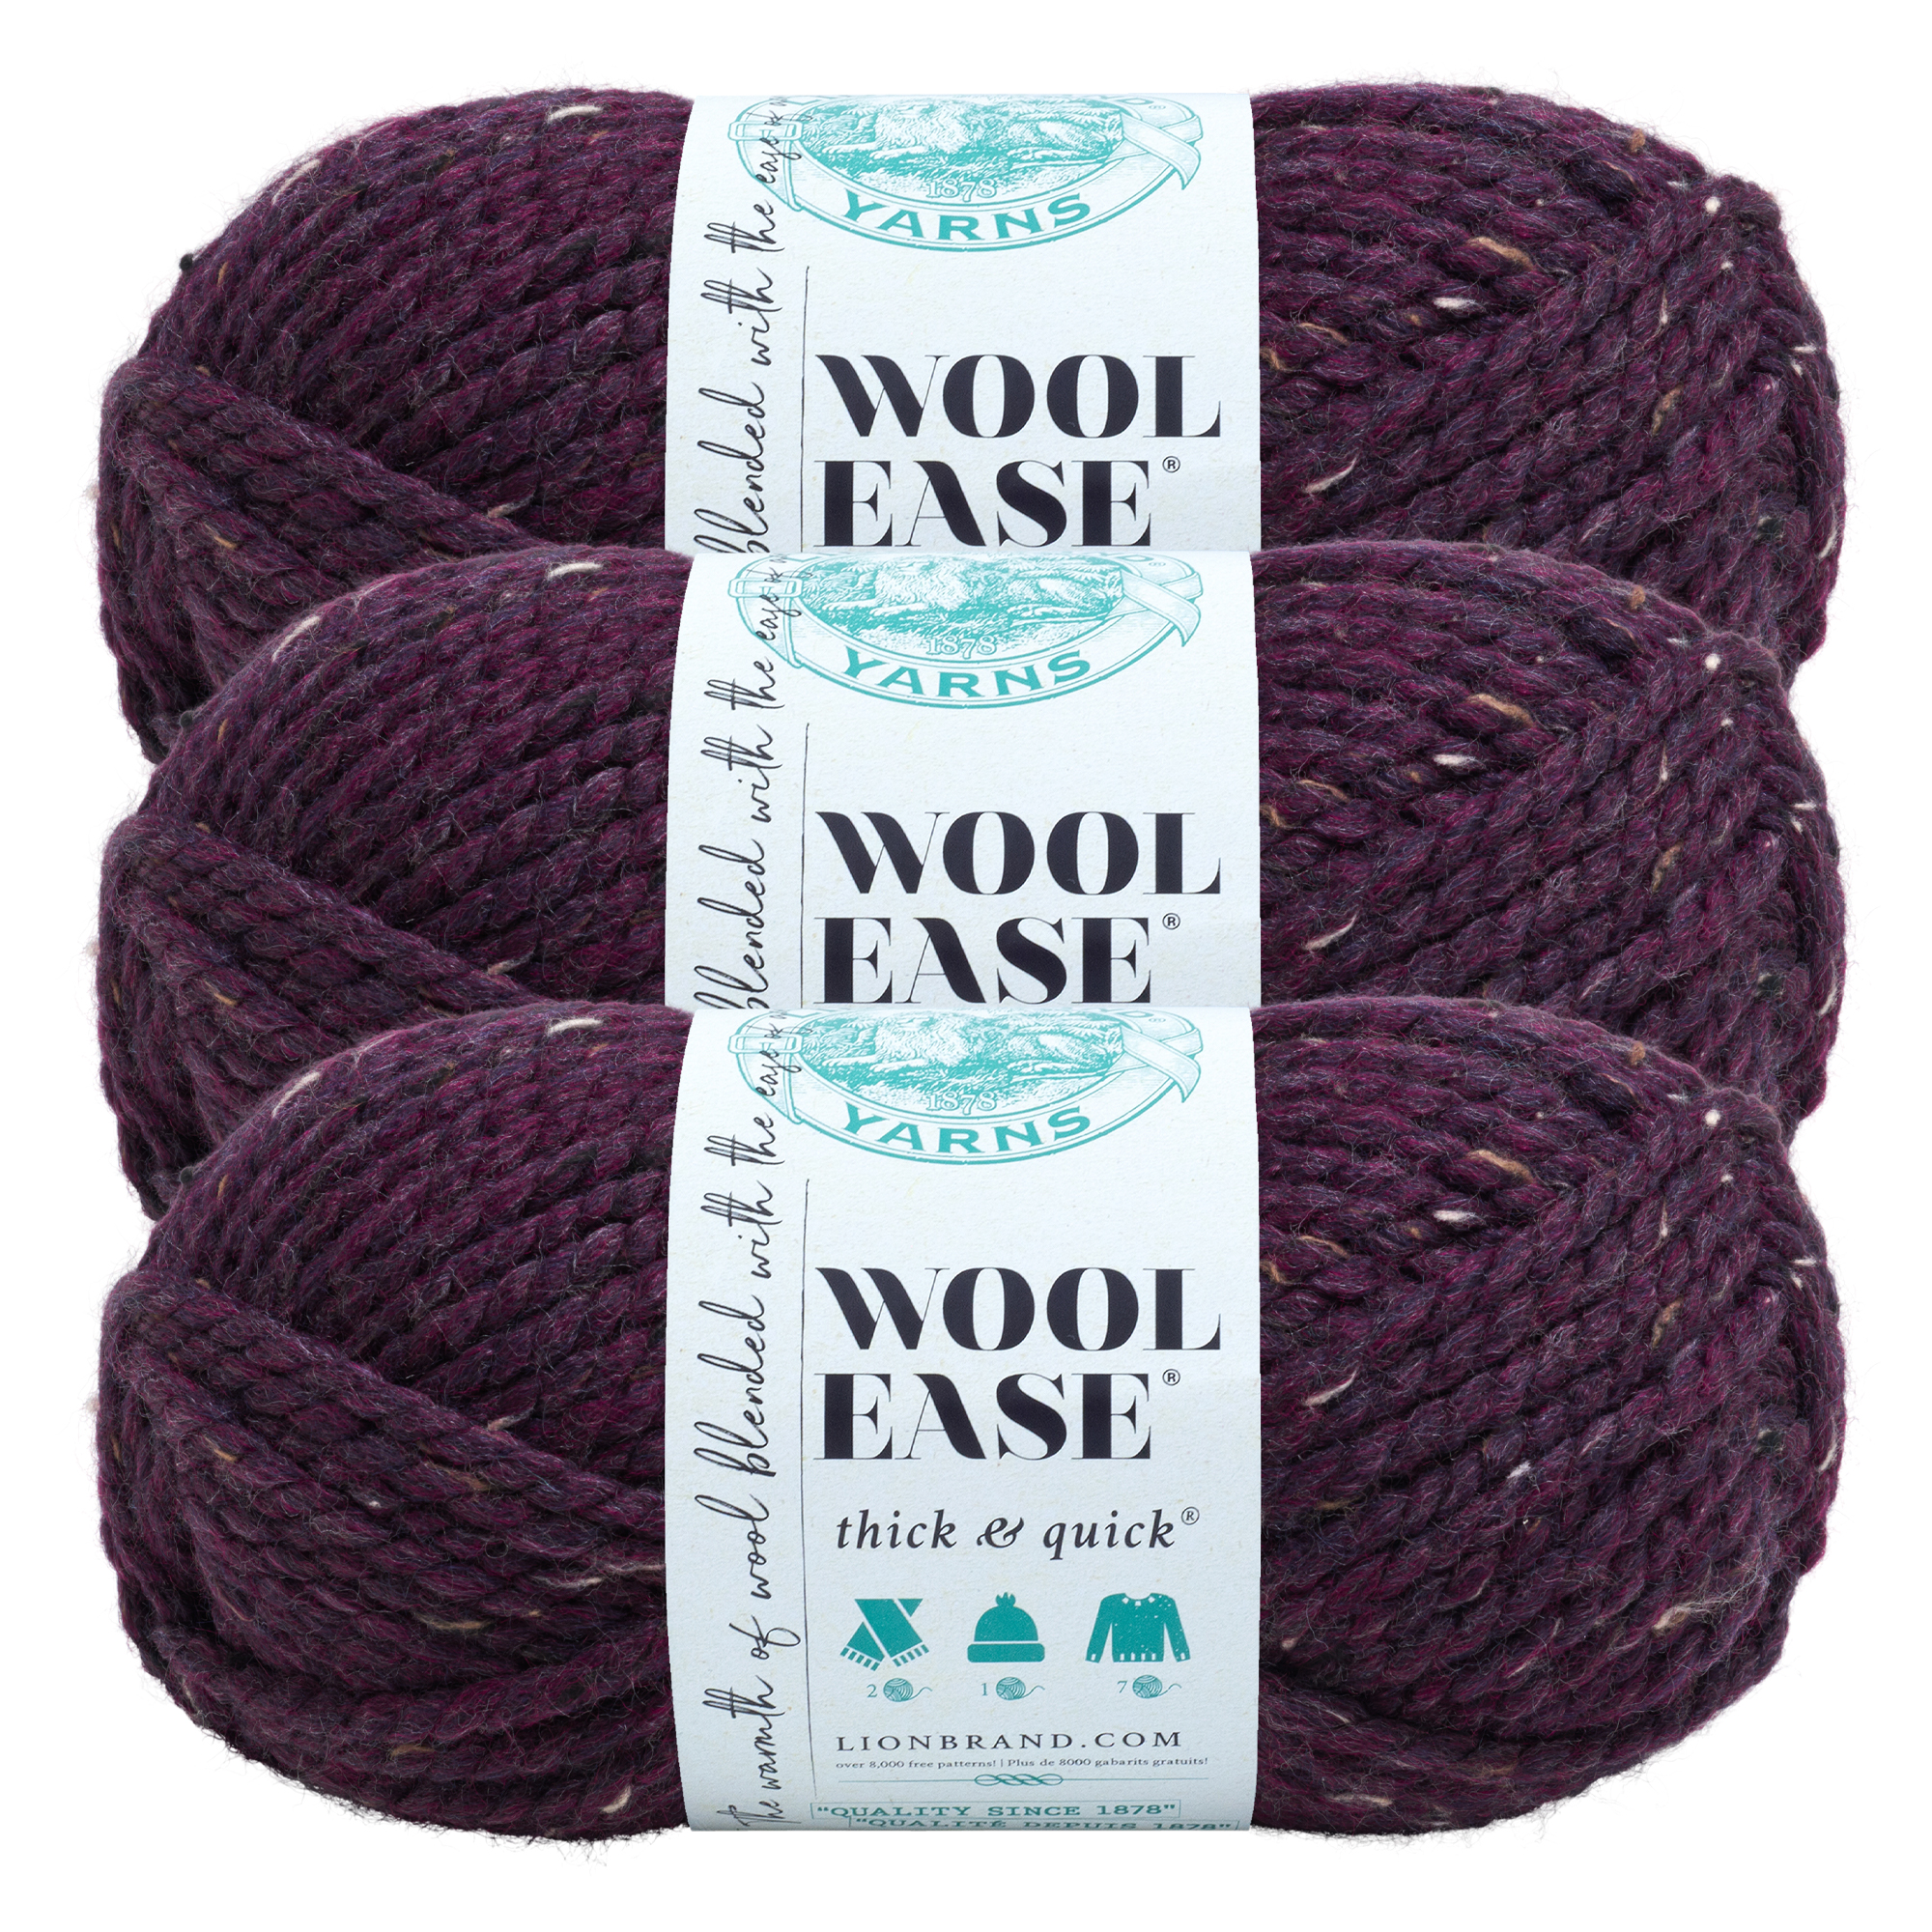 Lion Brand Yarn Wool-Ease Thick & Quick Raisin Super Bulky Acrylic Wool Purple Yarn 3 Pack - image 1 of 2